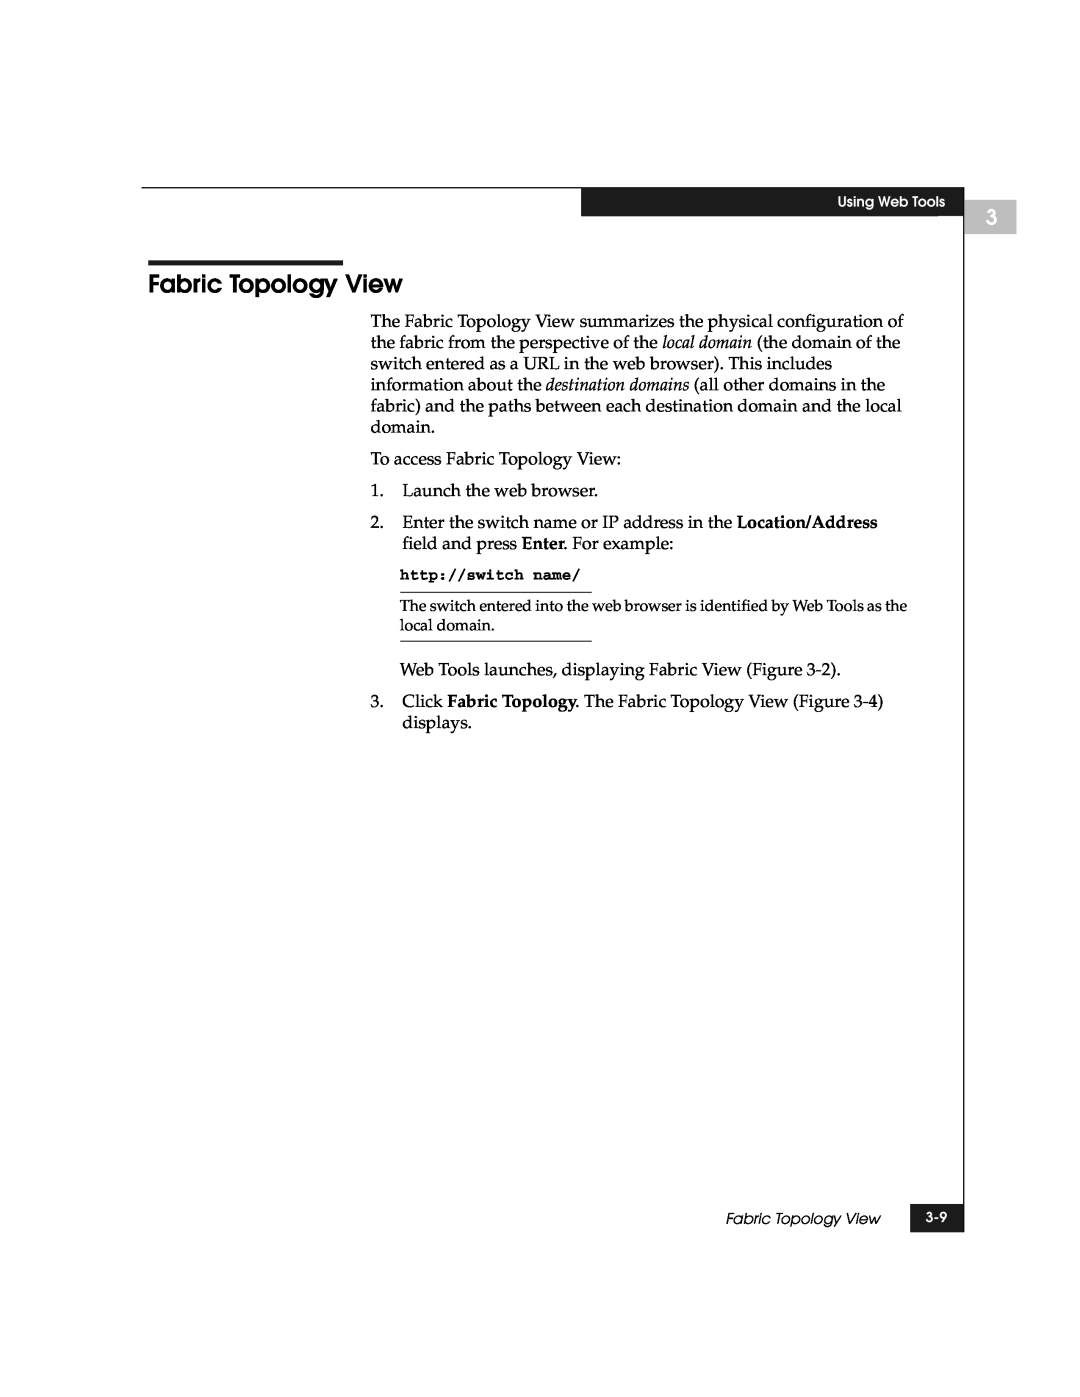 EMC DS-8B manual Fabric Topology View 